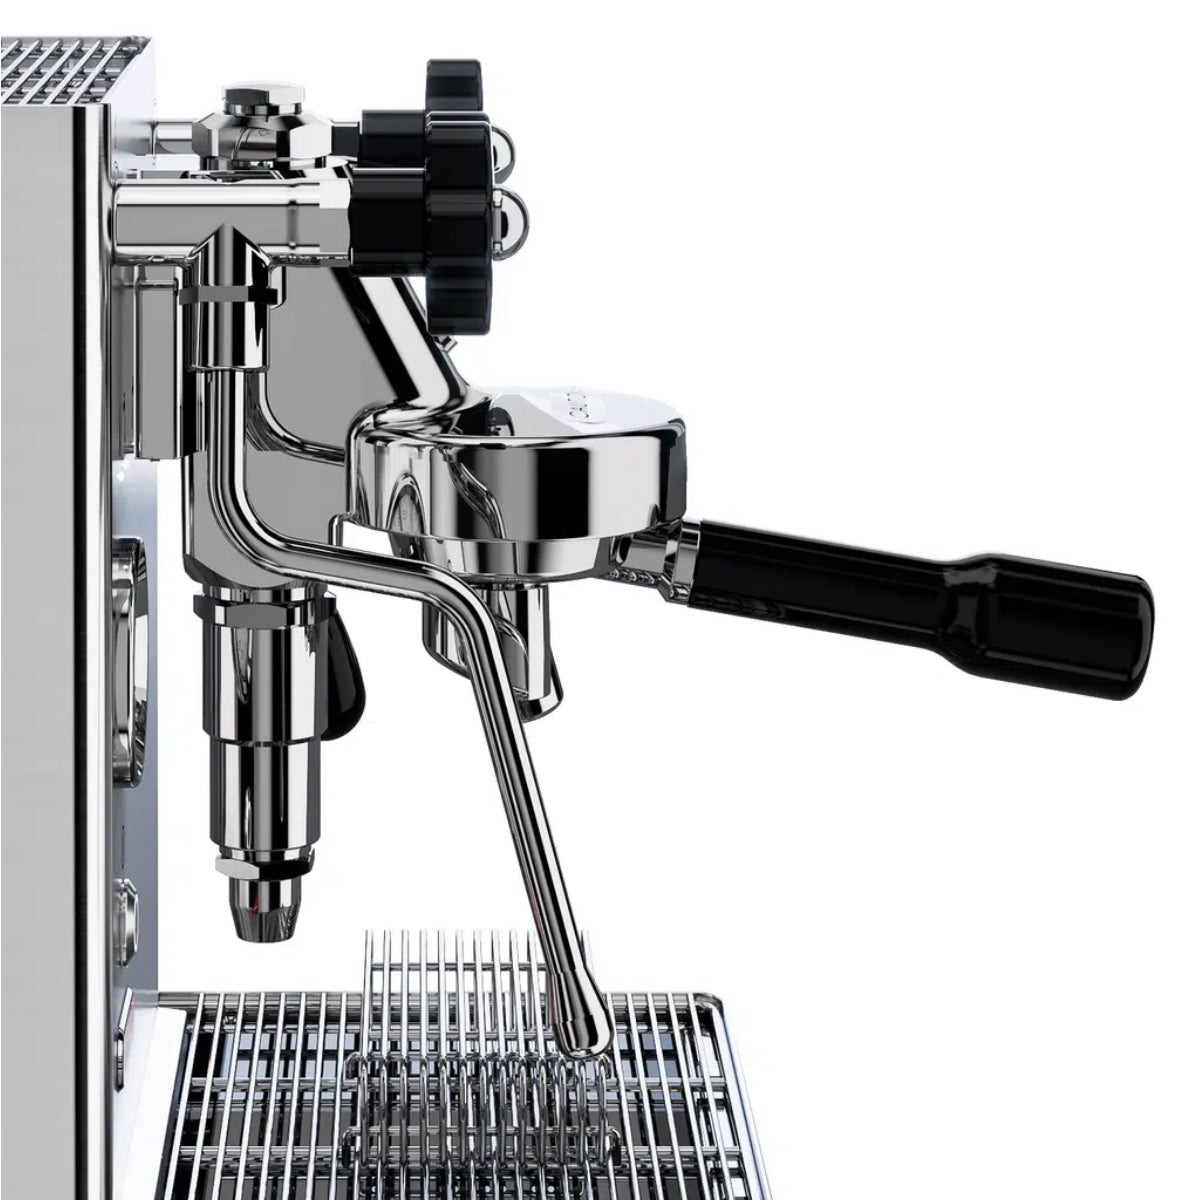 Lelit Mara X PID E61 Professional Semi-Automatic Espresso Machine (Stainless Steel) - PL62X